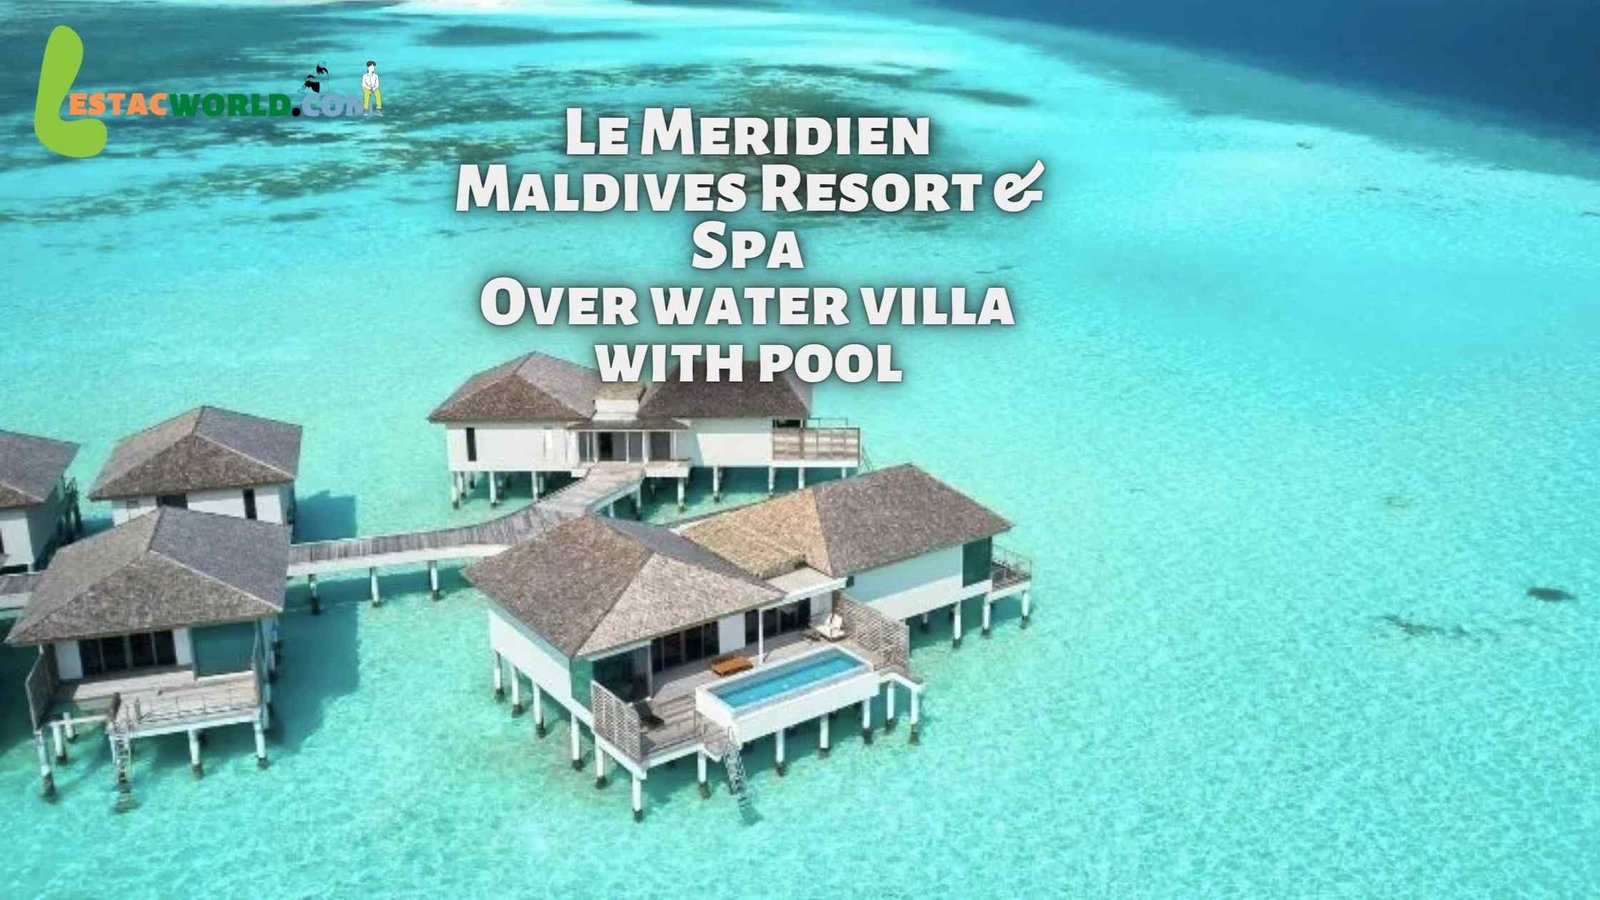 Le Meridien Maldives Resort & Spa Over water villa with pool